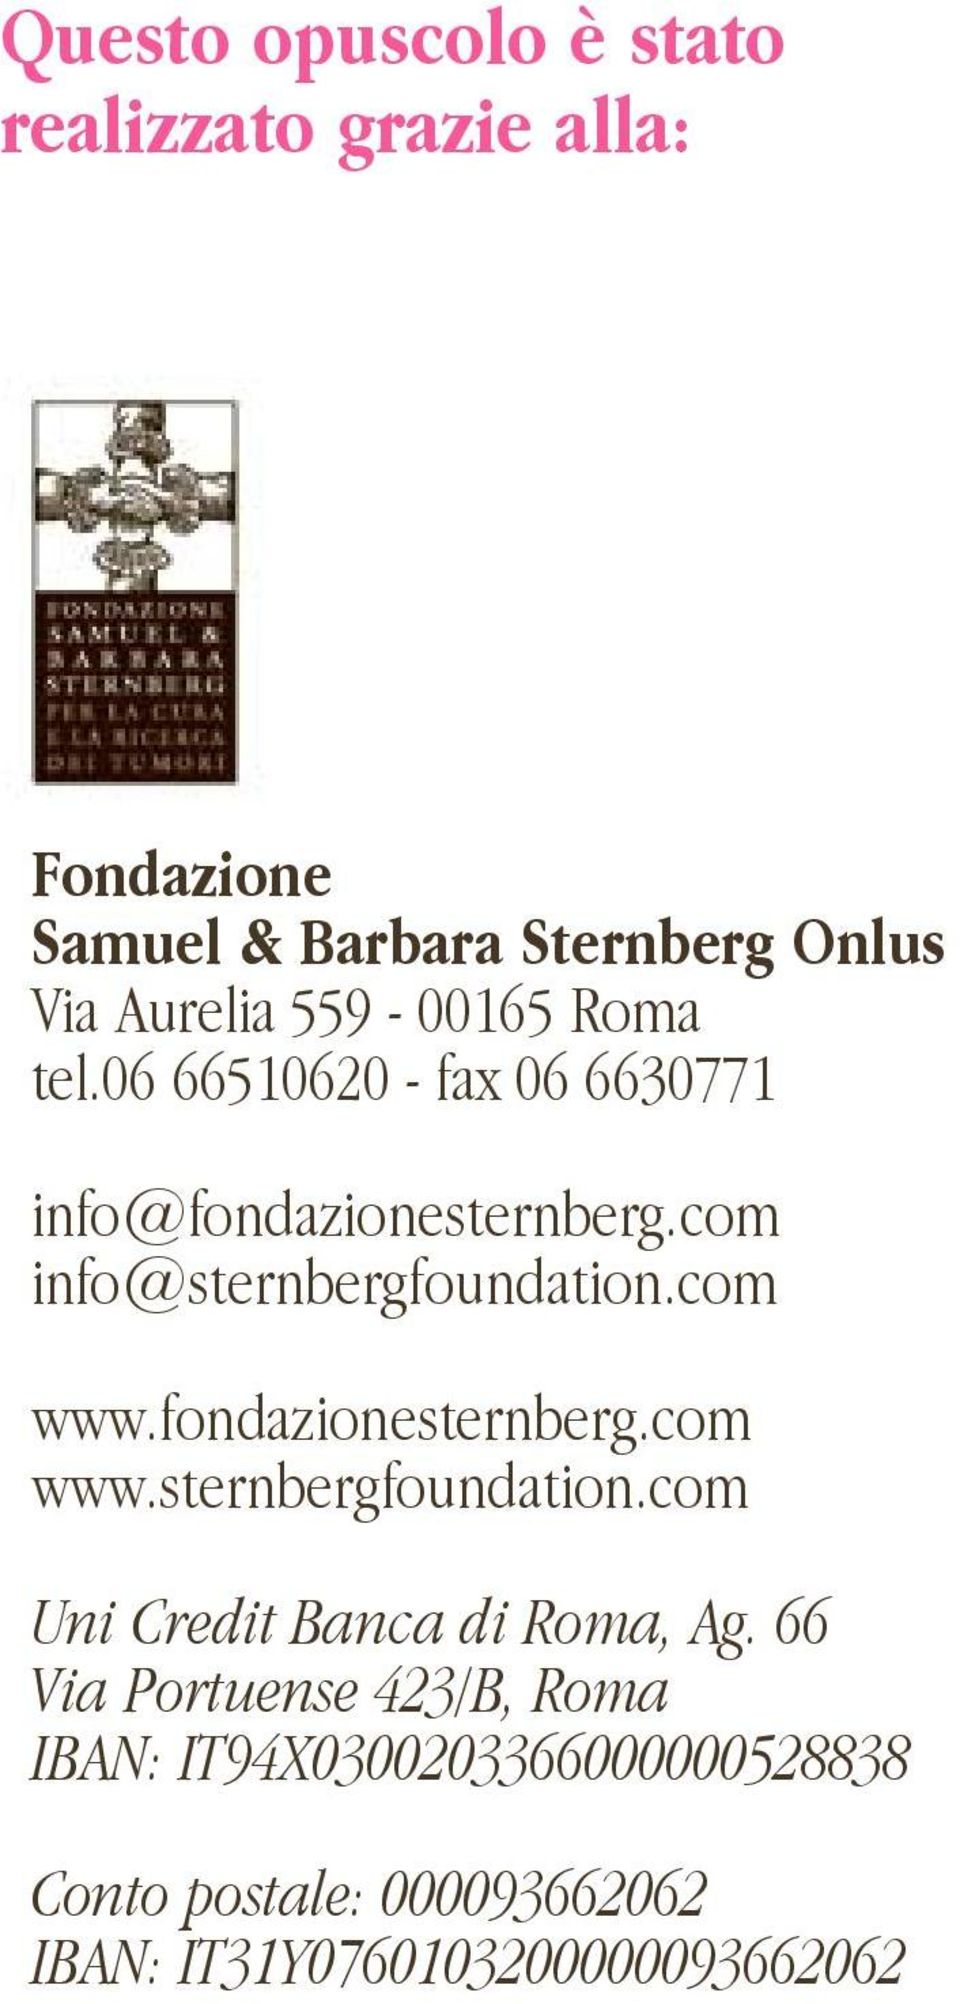 com www.fondazionesternberg.com www.sternbergfoundation.com Uni Credit Banca di Roma, Ag.